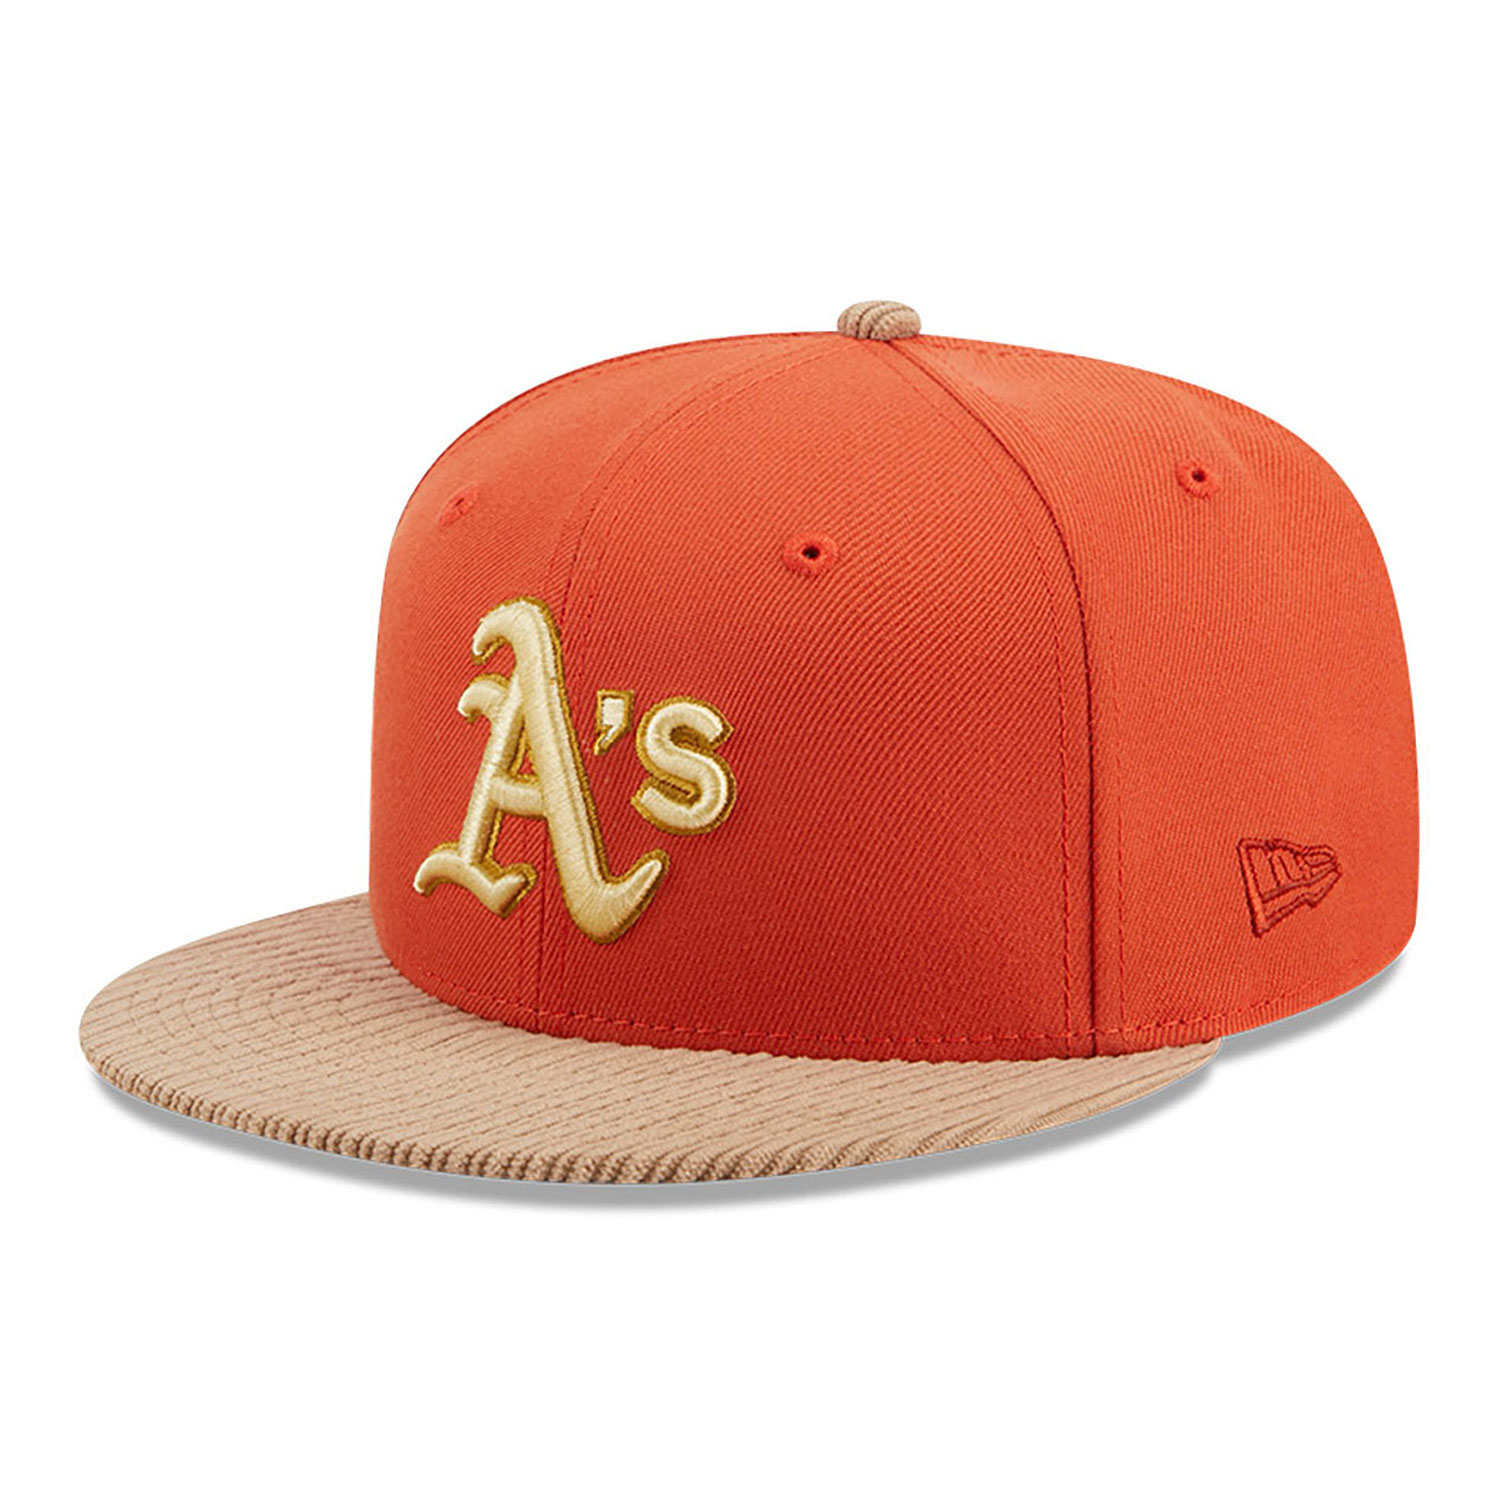 Oakland Athletics MLB Autumn Wheat Dark Orange 9FIFTY Snapback Cap